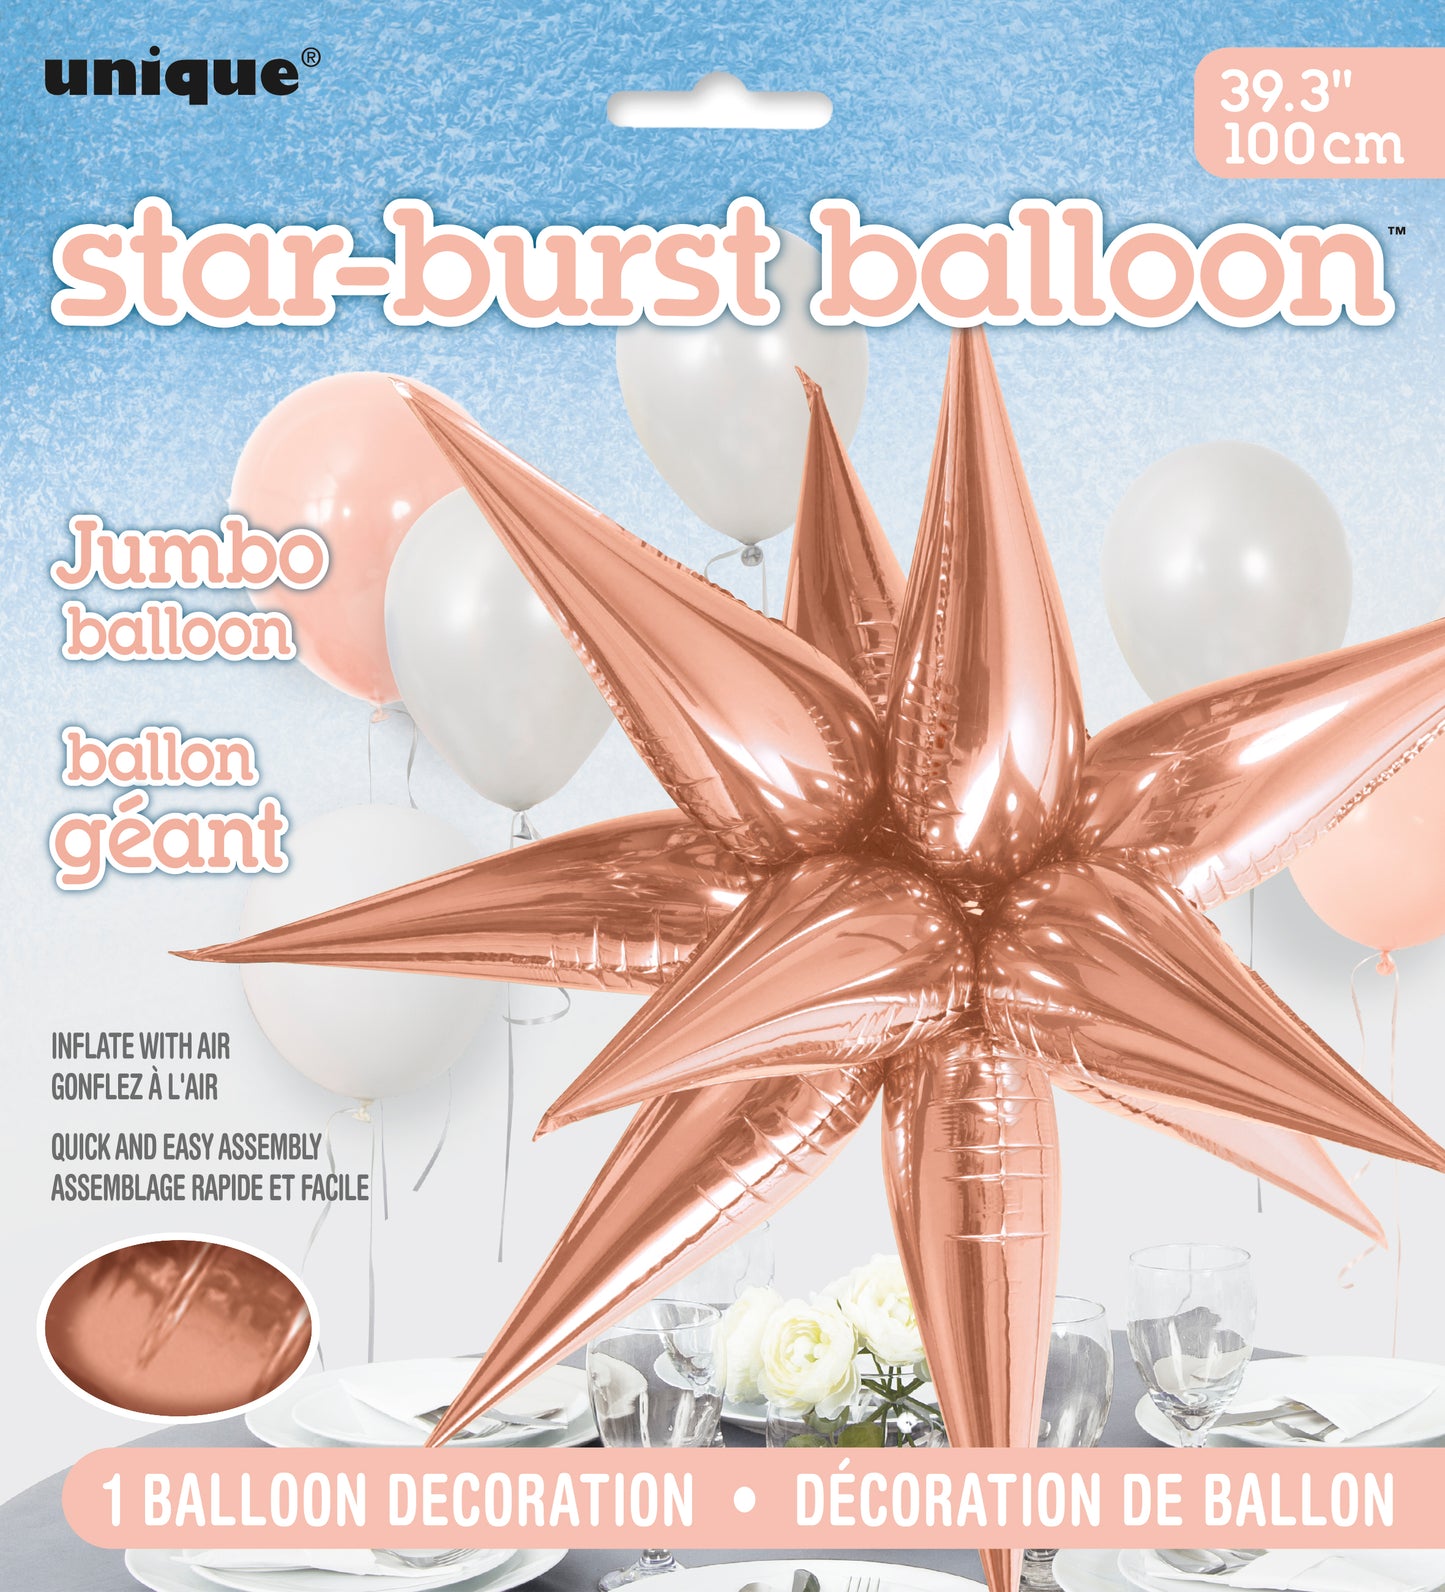 Star-Burst Balloons